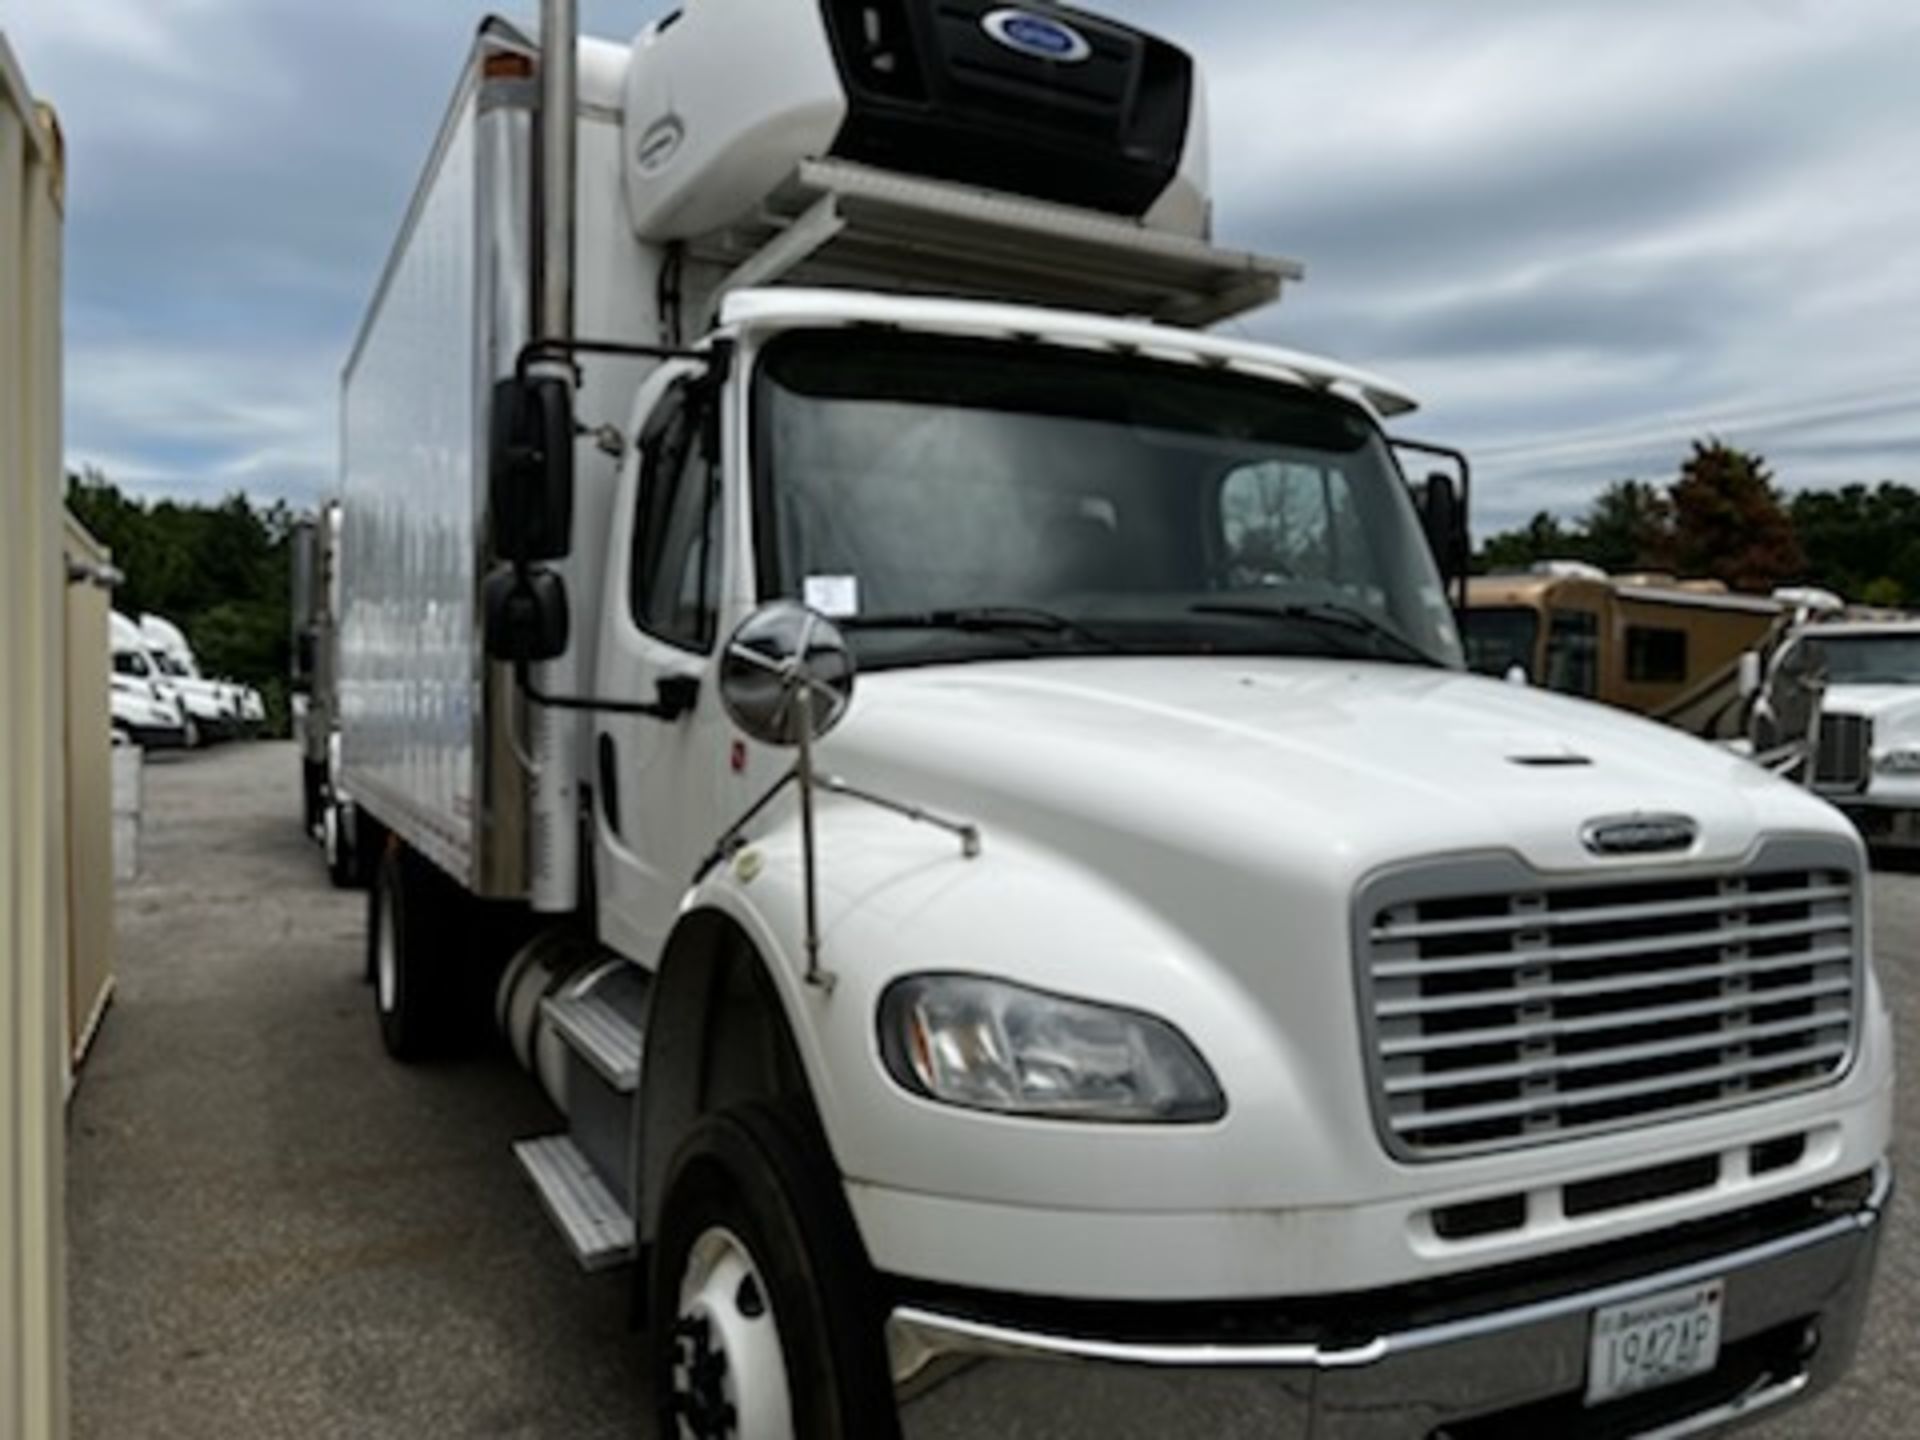 2016 Freightliner #M2106, 6-Wheel, 18' Refrigerated Box Truck, Cummins ISL 270HP, Allison 3000 RDS A - Image 2 of 8